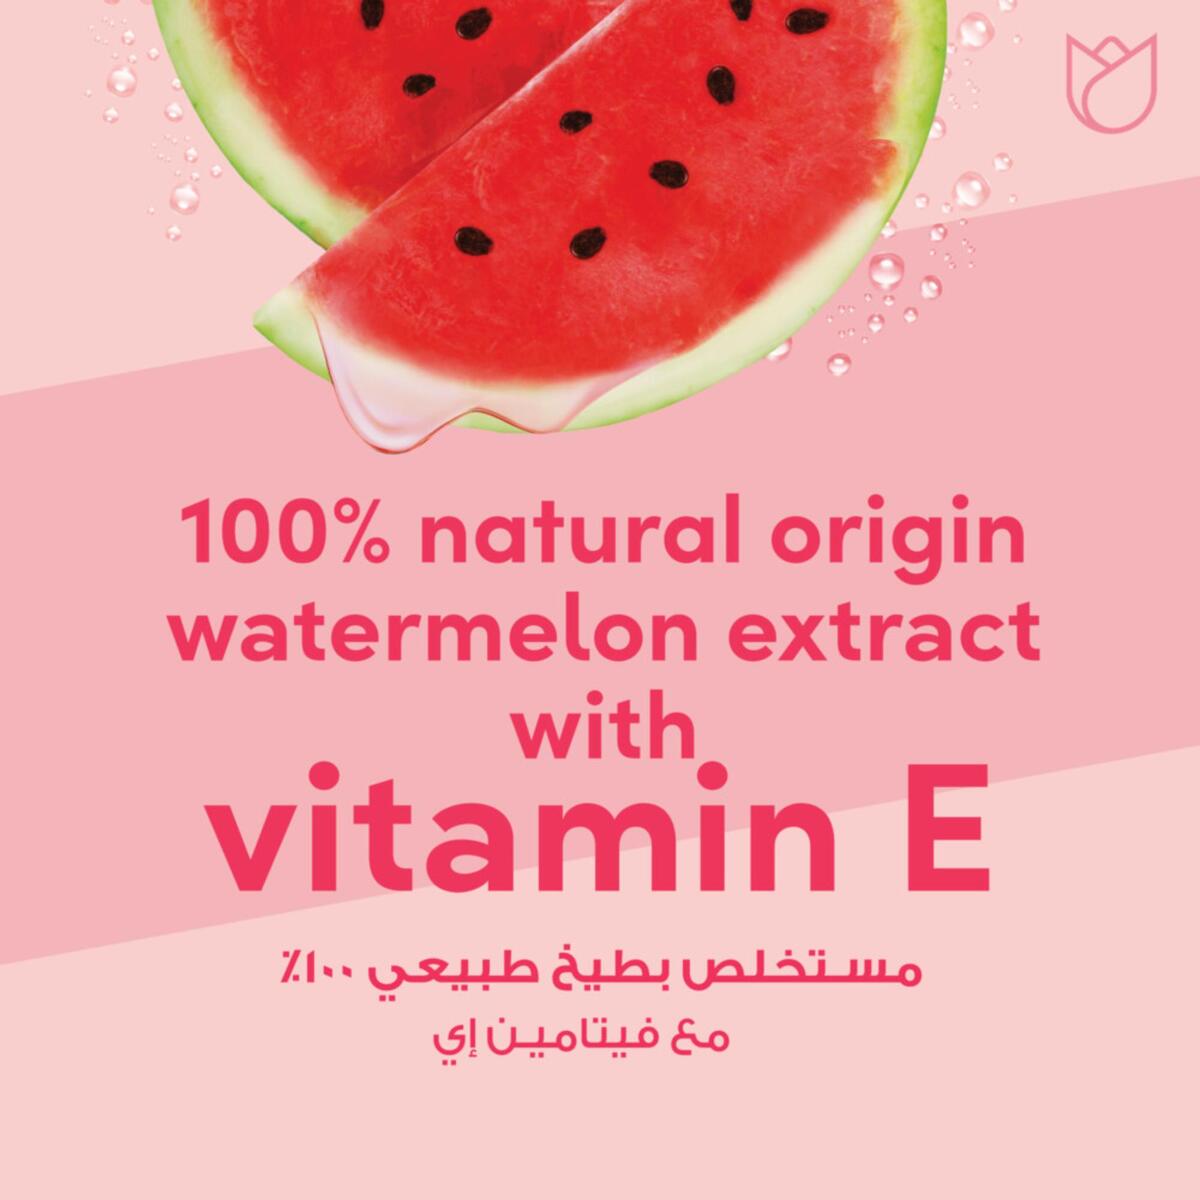 Pond's Healthy Hydration Watermelon Sheet Mask 25 ml